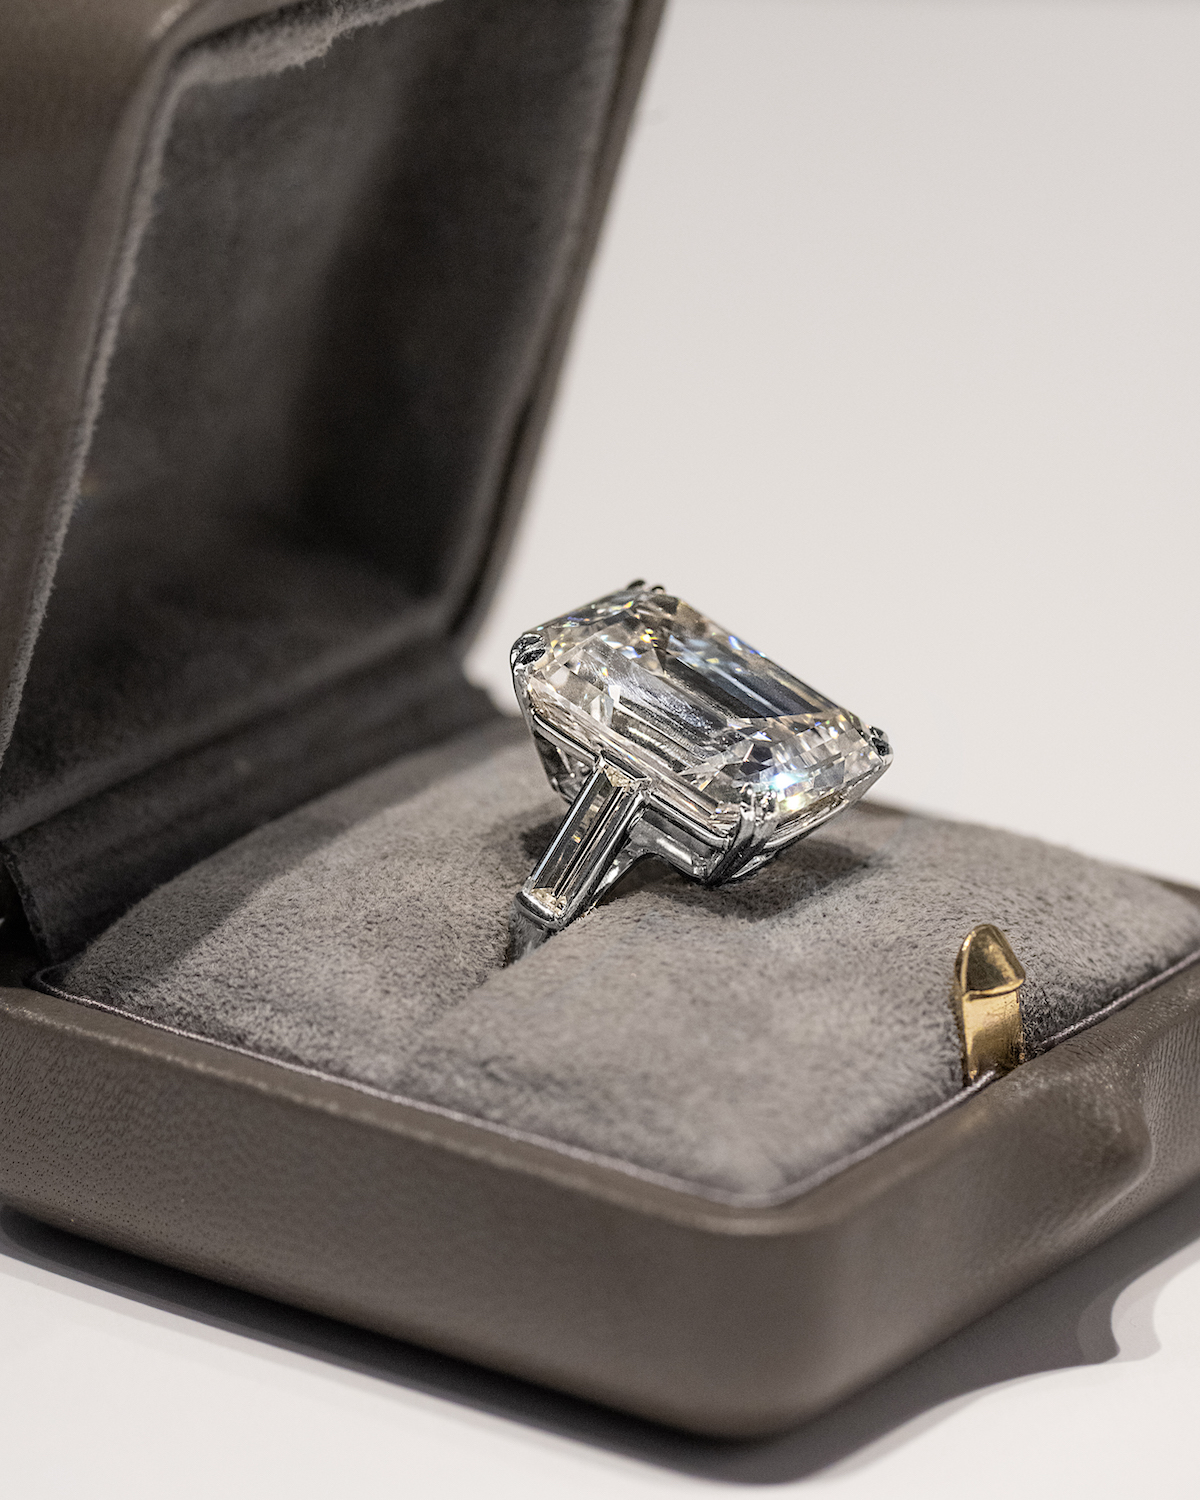 Greg Kwiat Fred Leighton natural diamond jewelry engagement ring